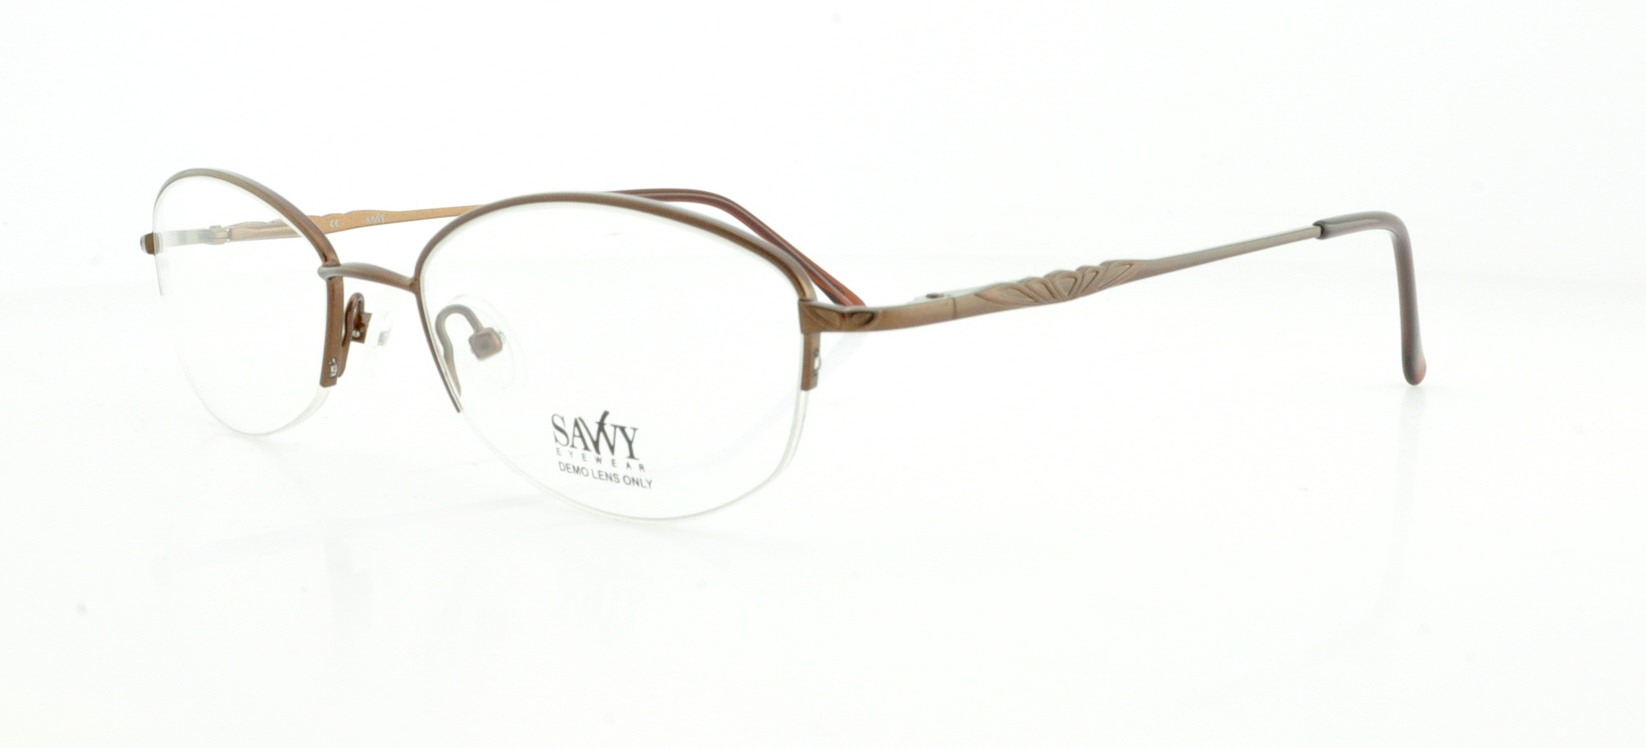 Picture of Savvy Eyeglasses SAVVY 328